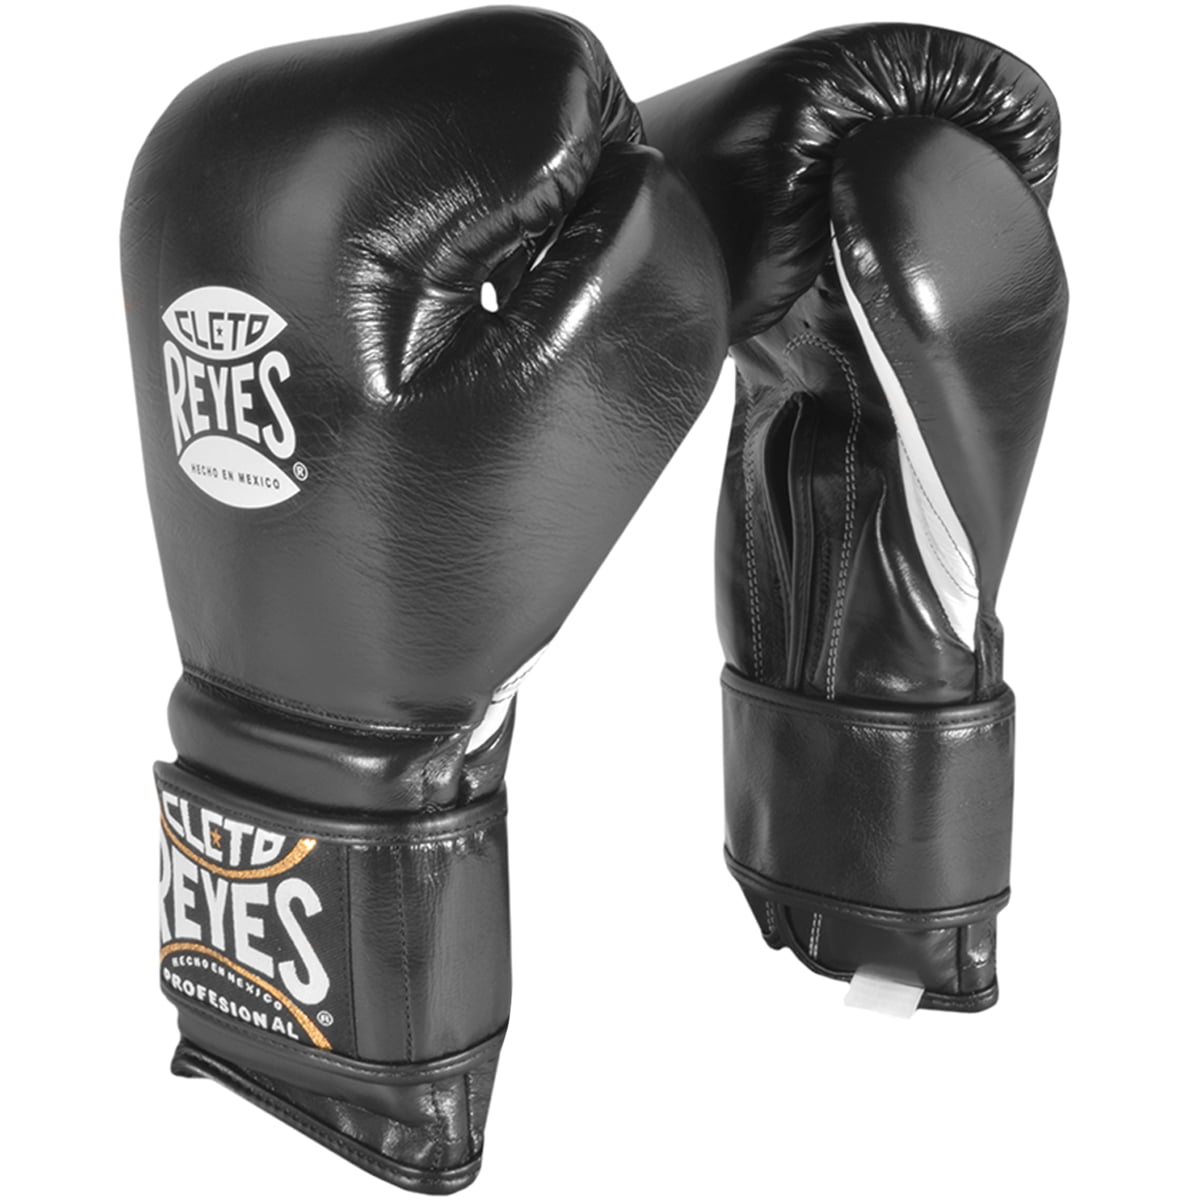 Tactic boxing. Боксерские перчатки Reyes. Cleto Reyes перчатки. Cleto Reyes перчатки 16 унций. Клето рейс боксерские перчатки.